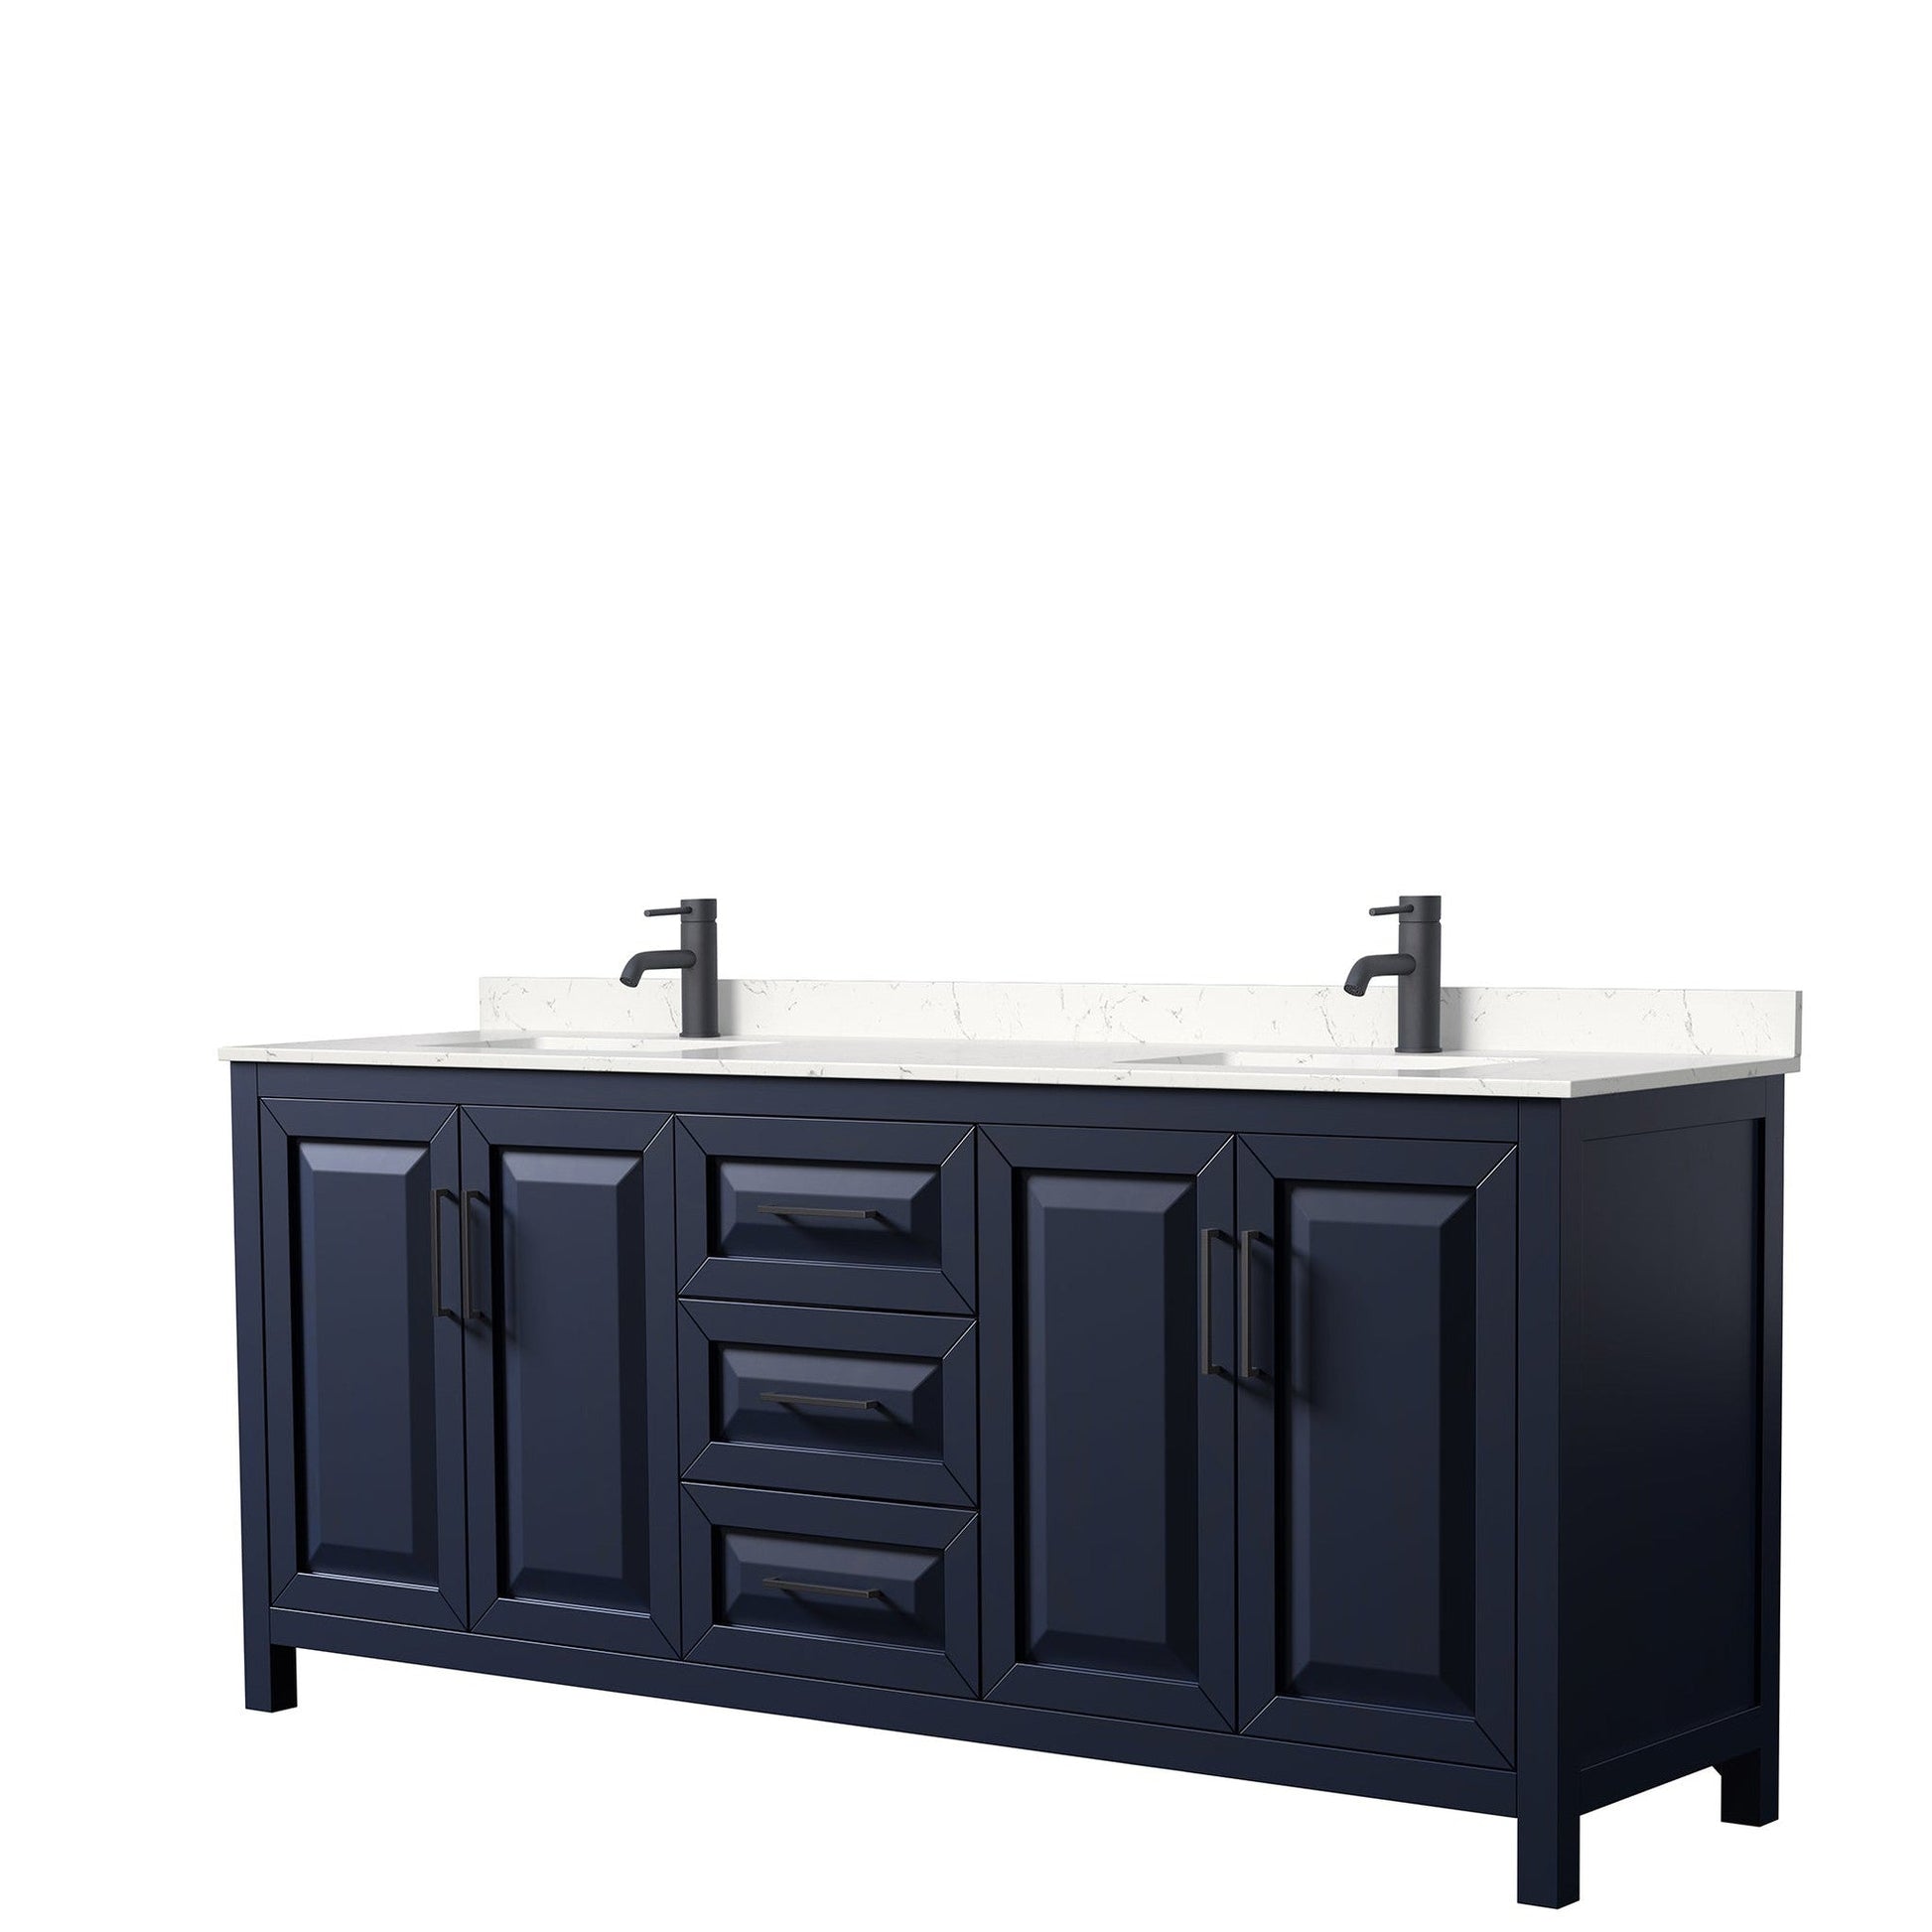 Daria 80" Double Bathroom Vanity in Dark Blue, Carrara Cultured Marble Countertop, Undermount Square Sinks, Matte Black Trim